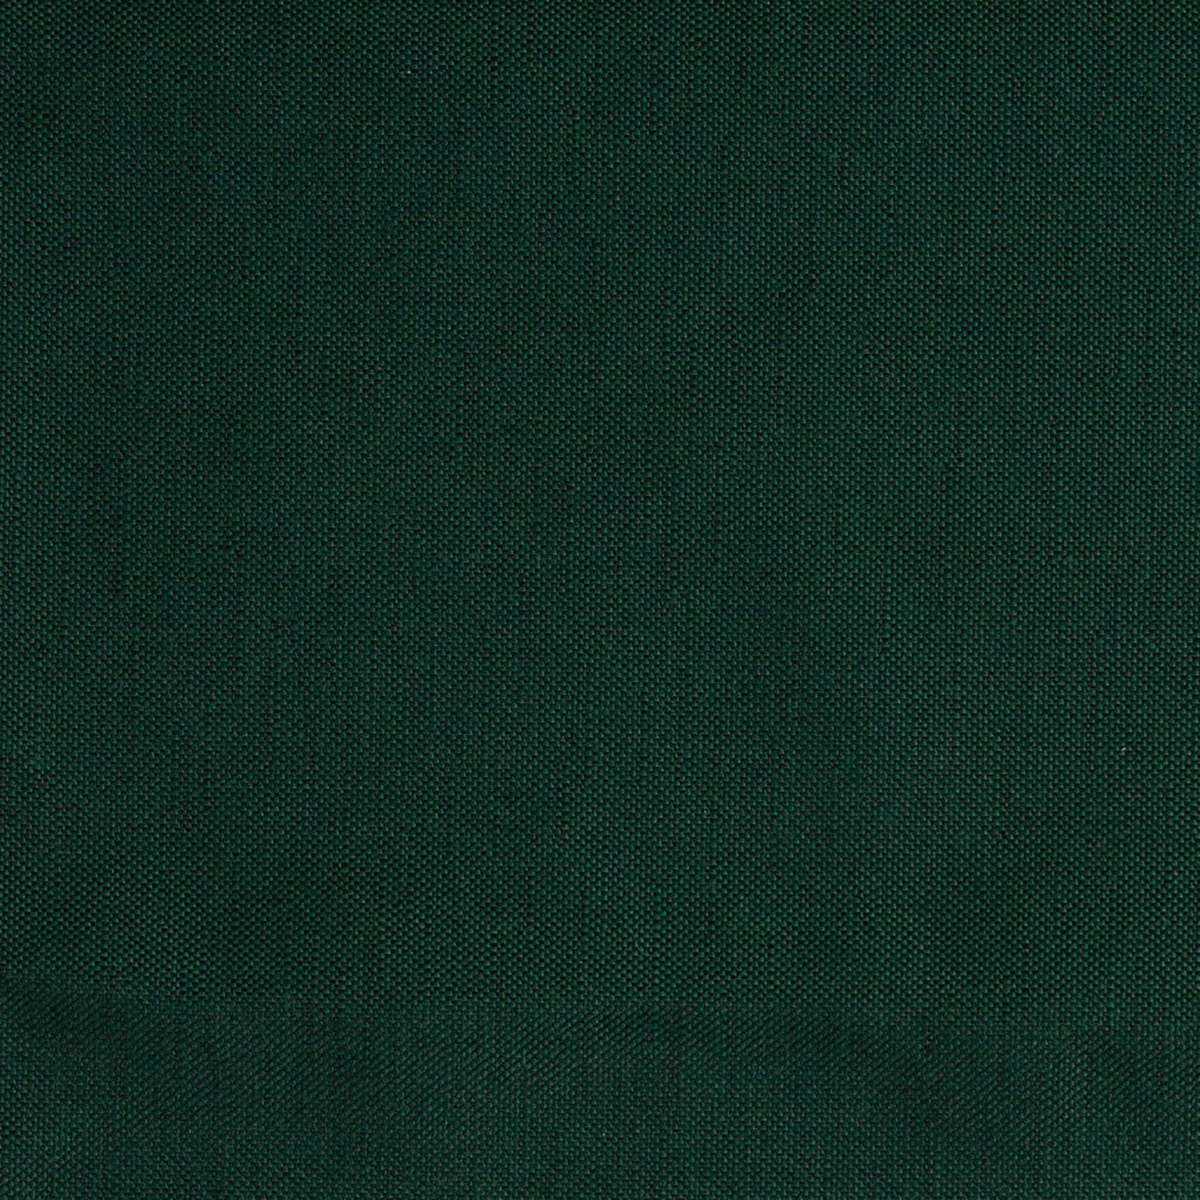 linen mallard dark cushion for charleston teak arm chair thumbnail image